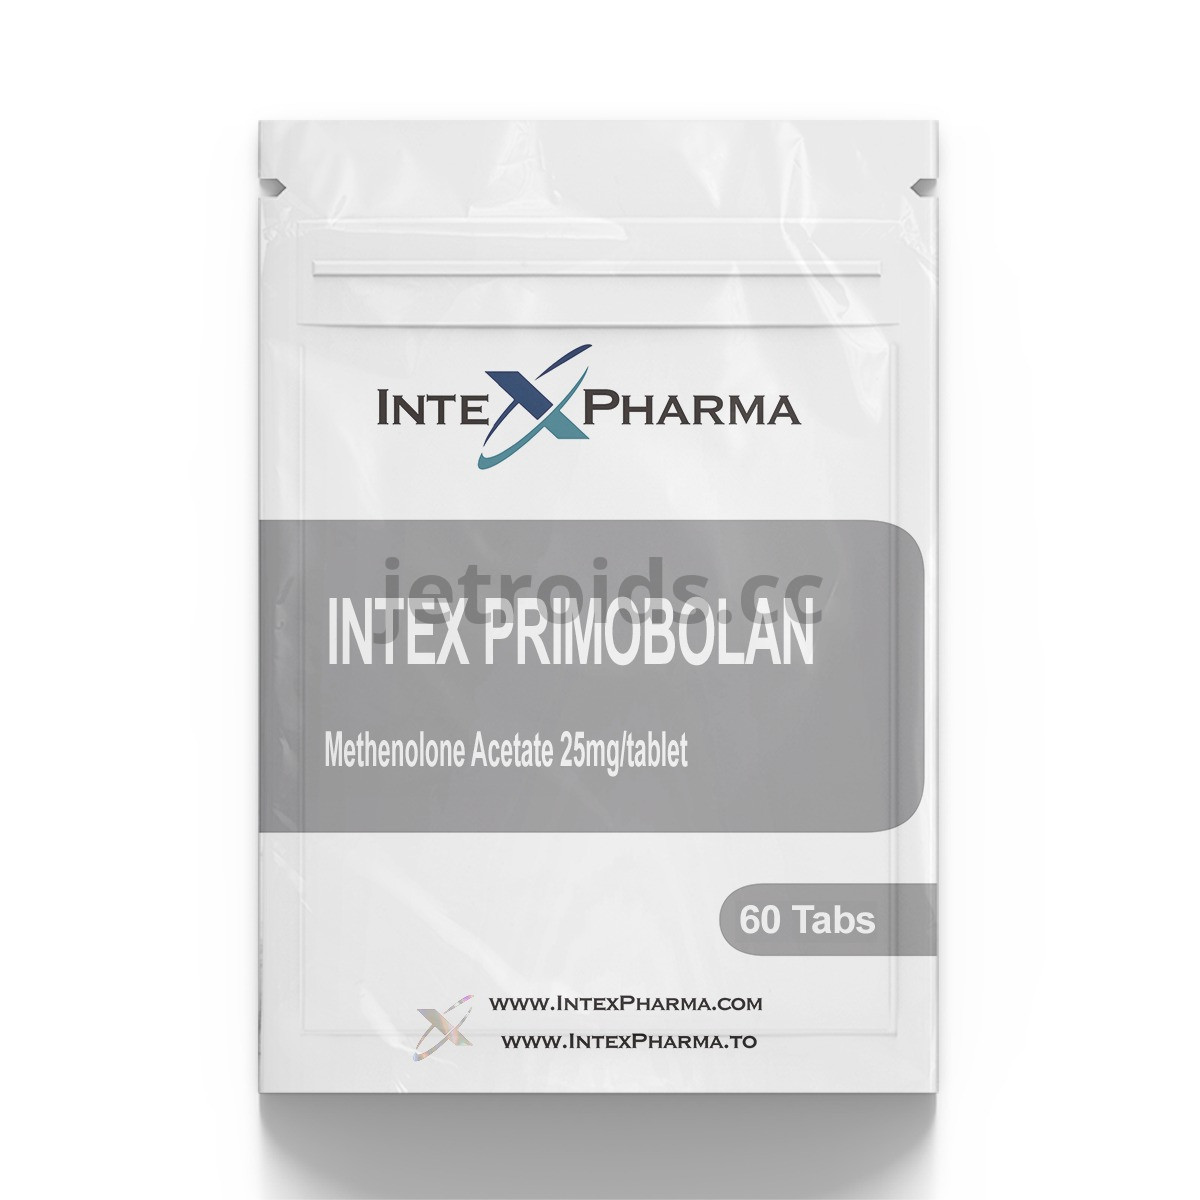 IntexPharma Intex Primobolan Product Info